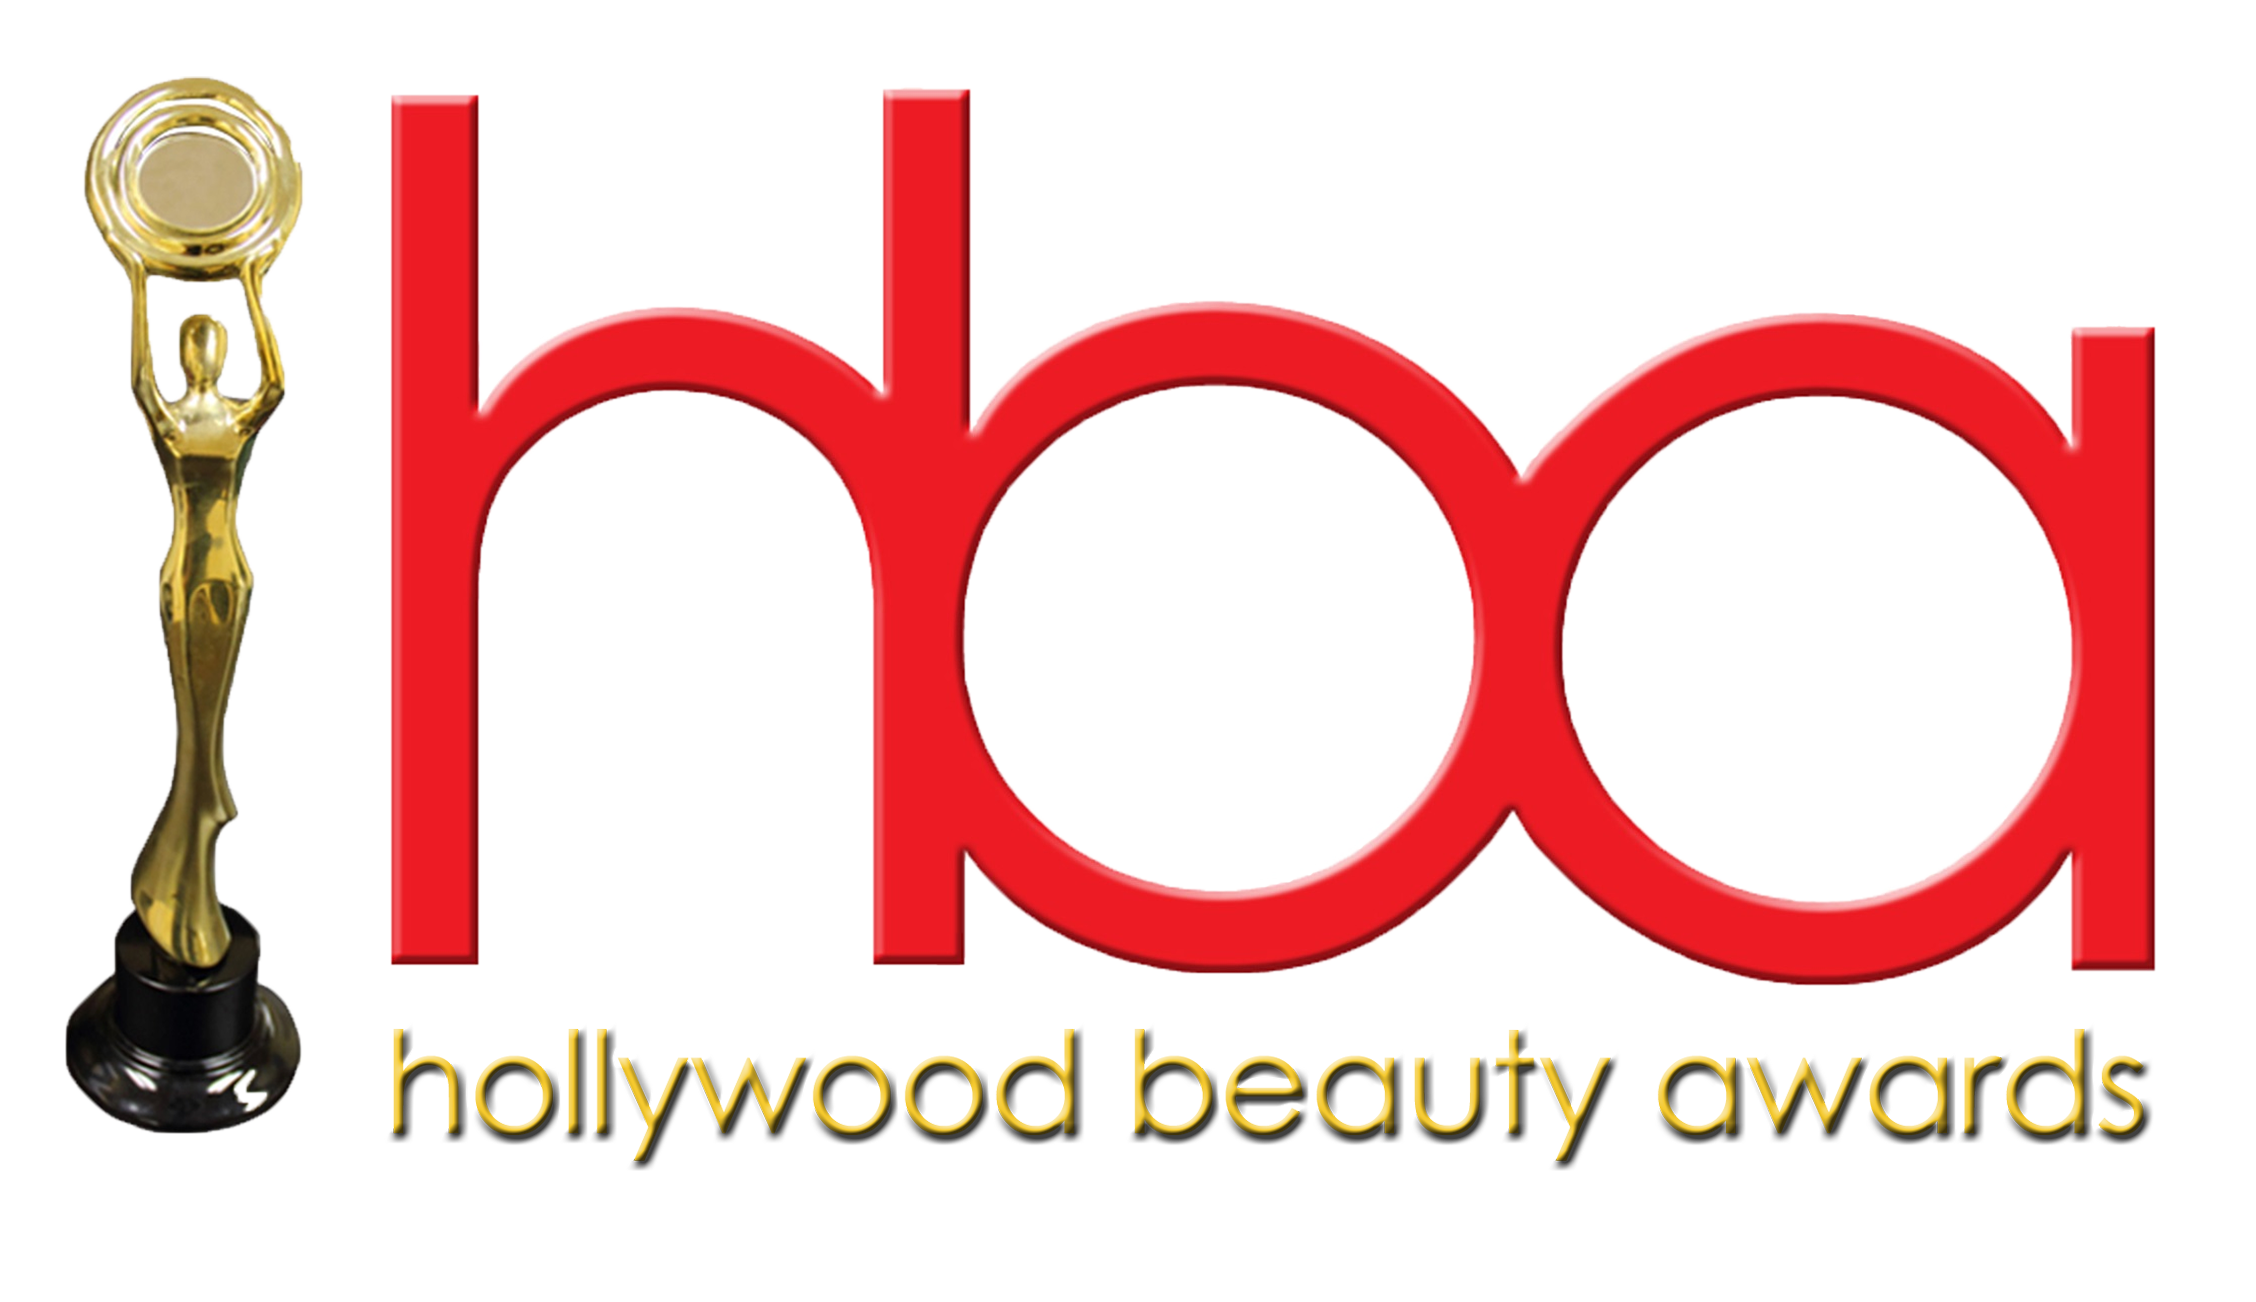 Hollywood Beauty Awards Postponed